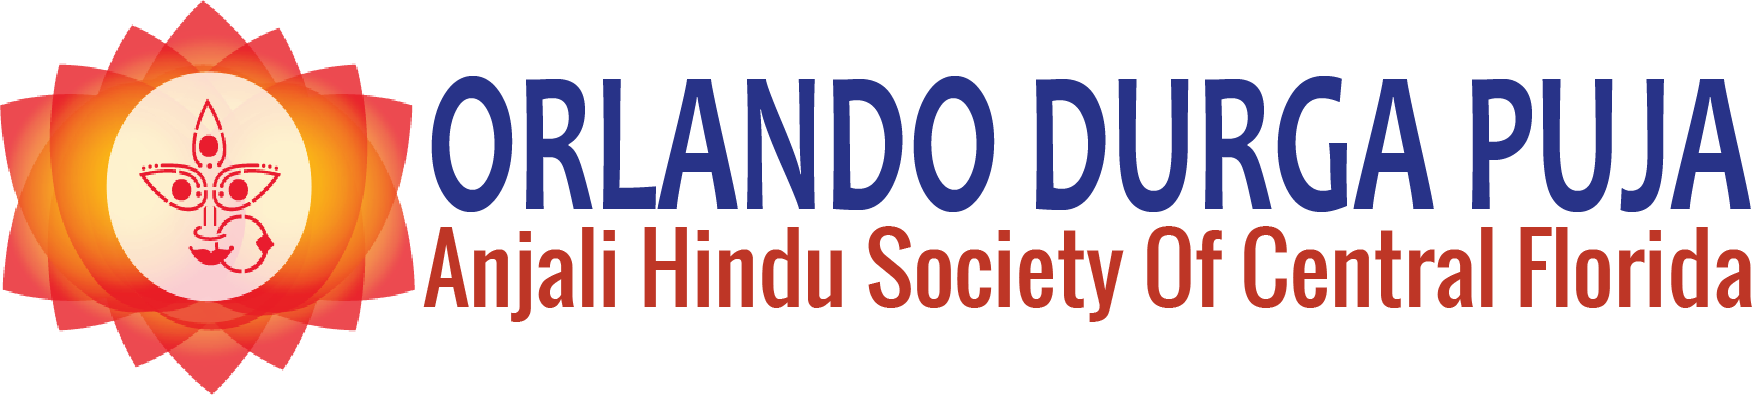 Orlando Durga Puja - Anjali Hindu Society of Central Florida